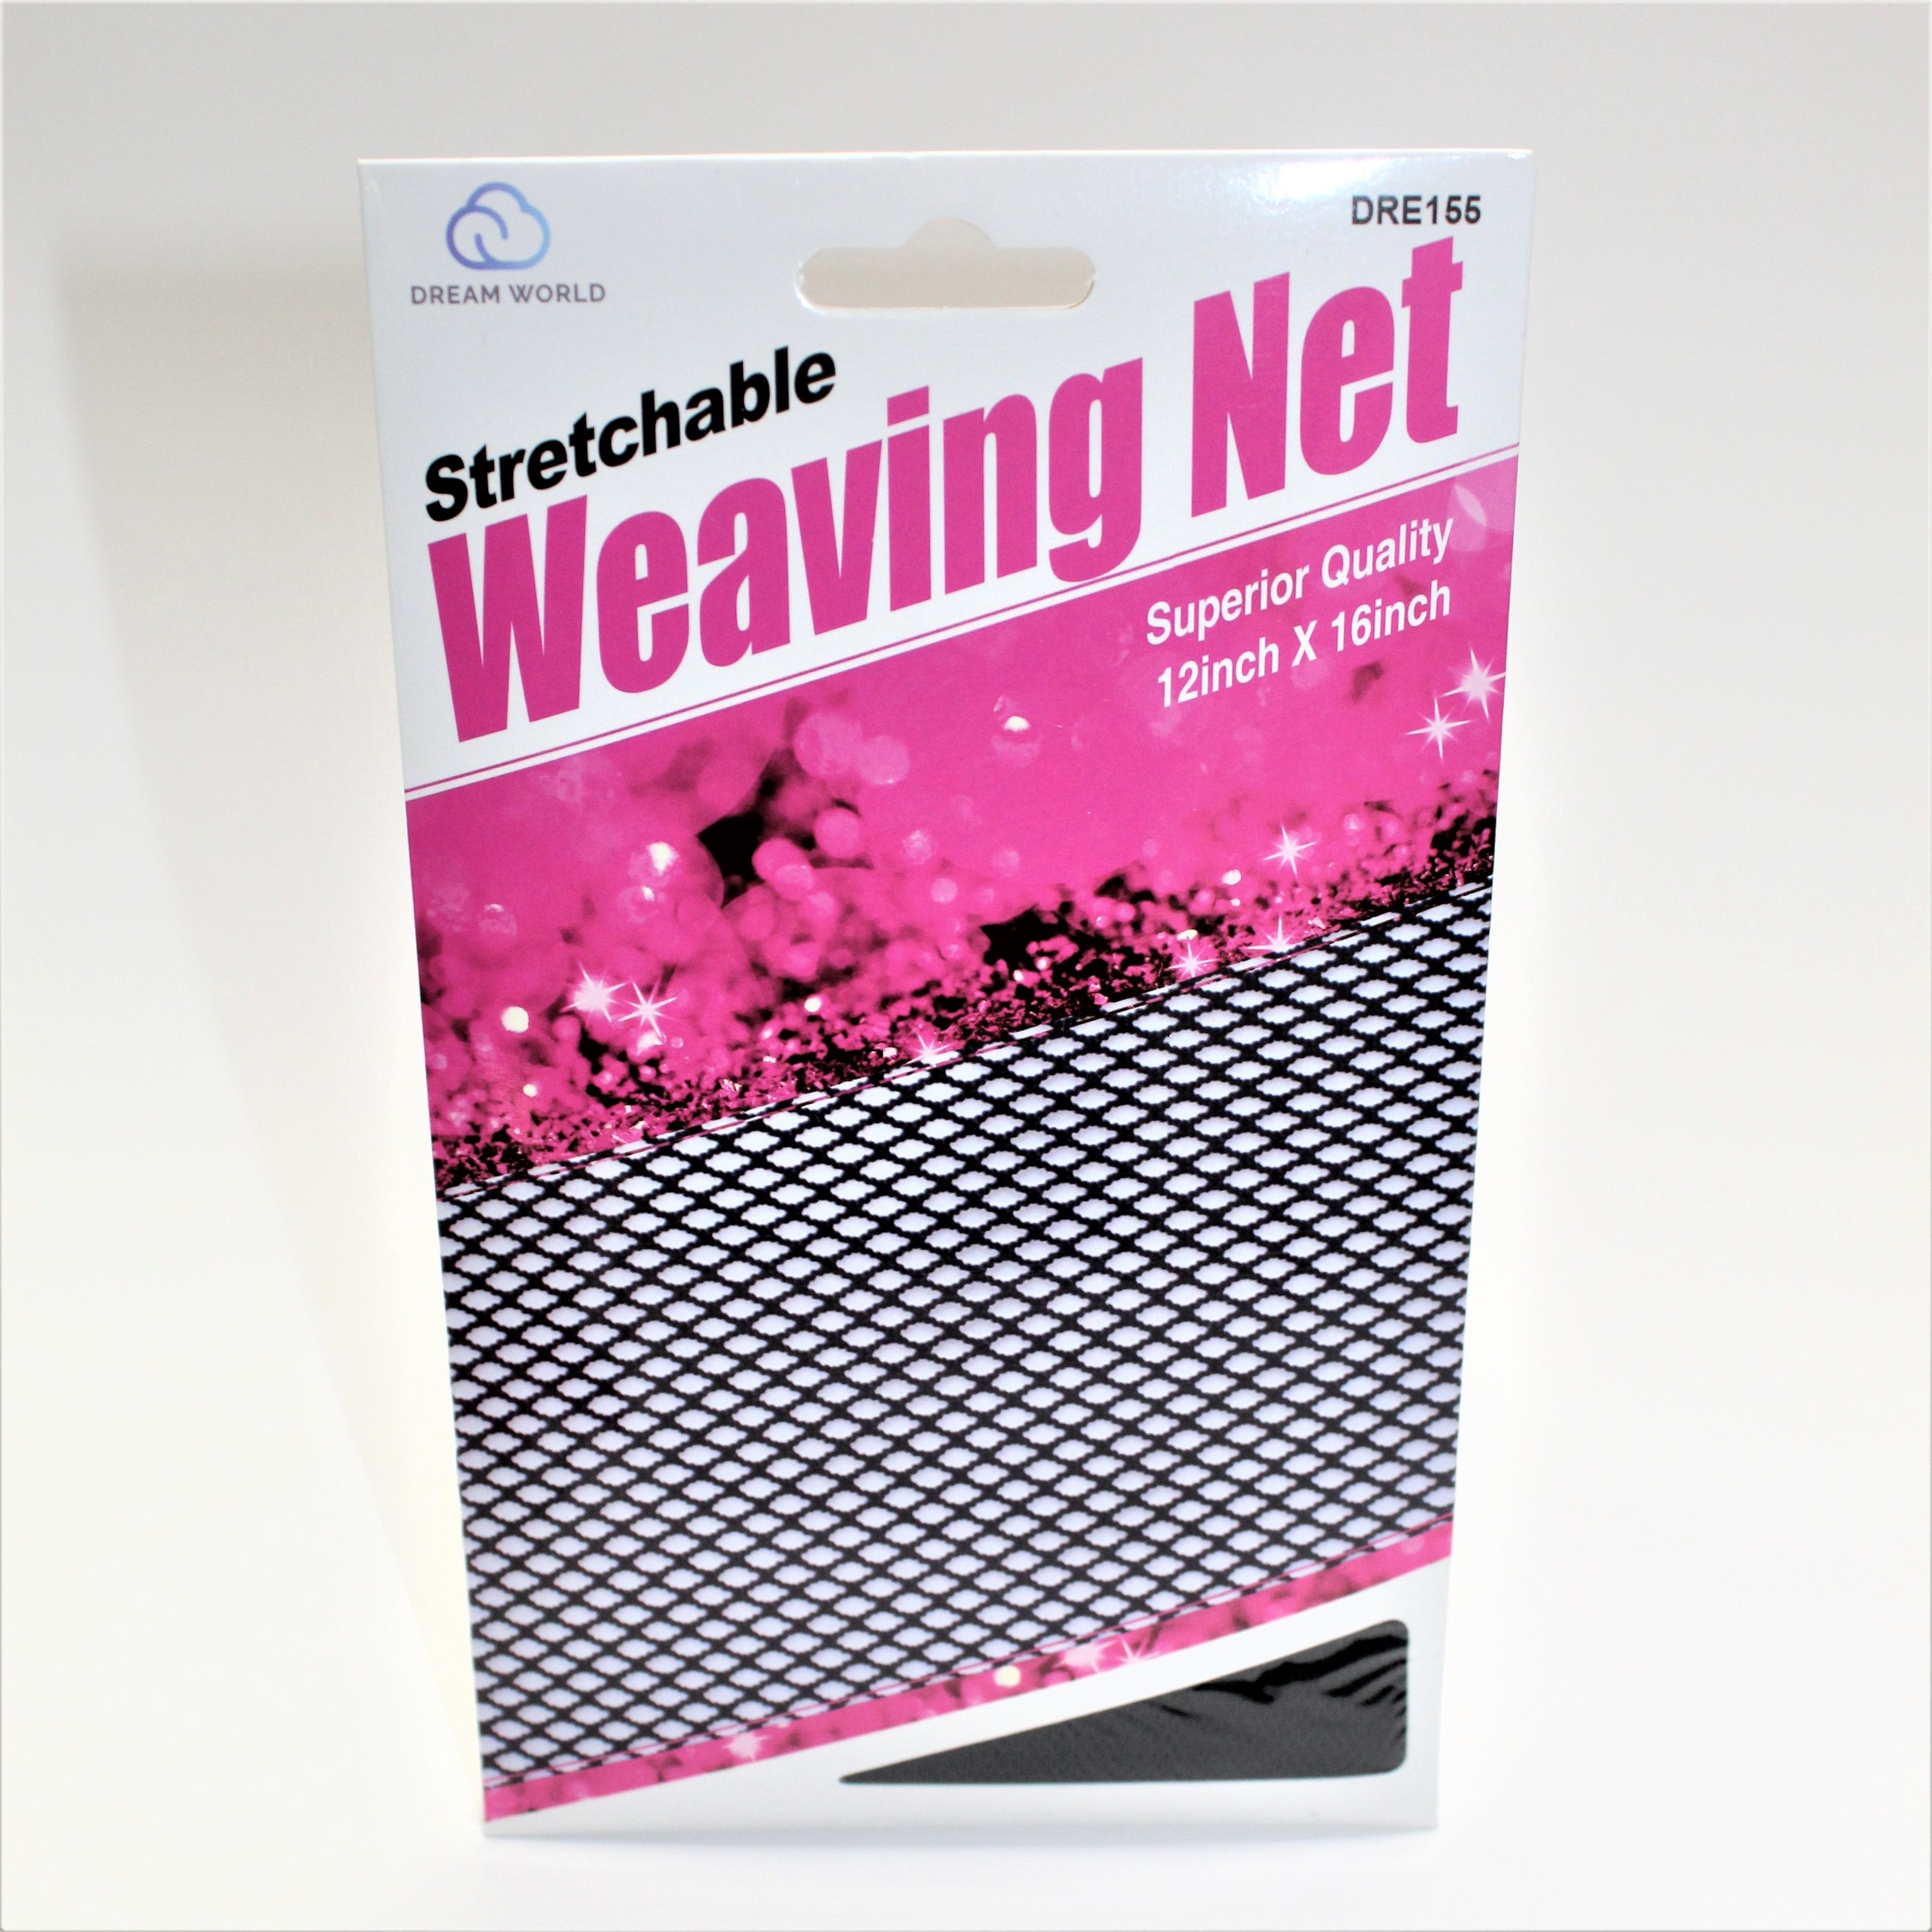 Dream World Stretchable Weaving Net DRE155 - Beauty Bar & Supply